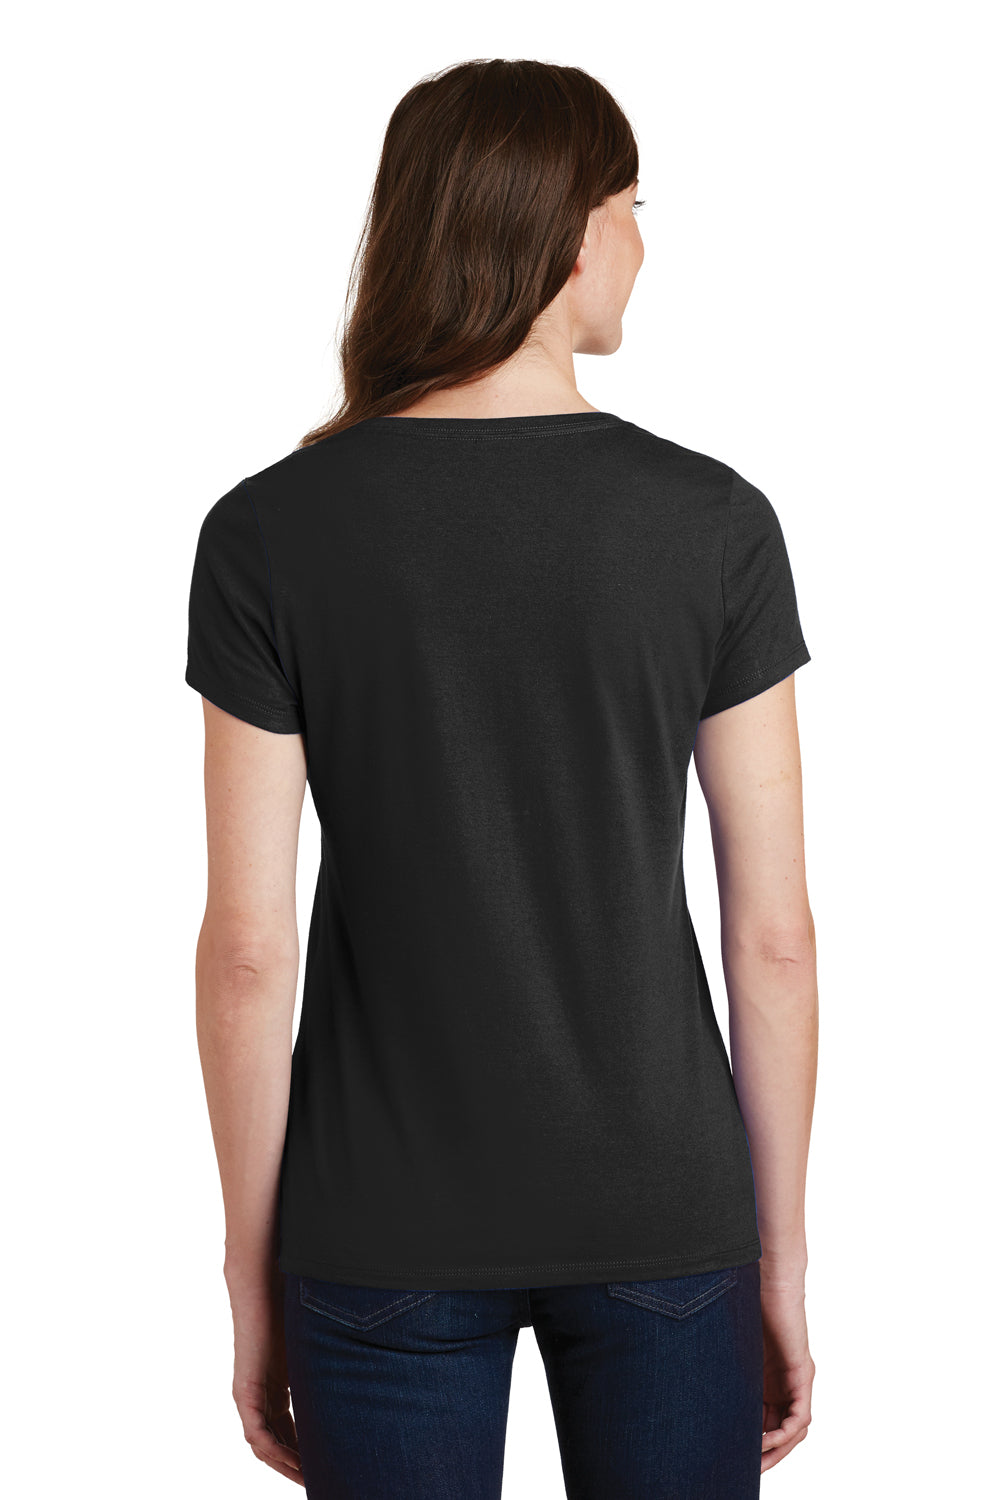 Port & Company LPC450V Womens Fan Favorite Short Sleeve V-Neck T-Shirt Black Back